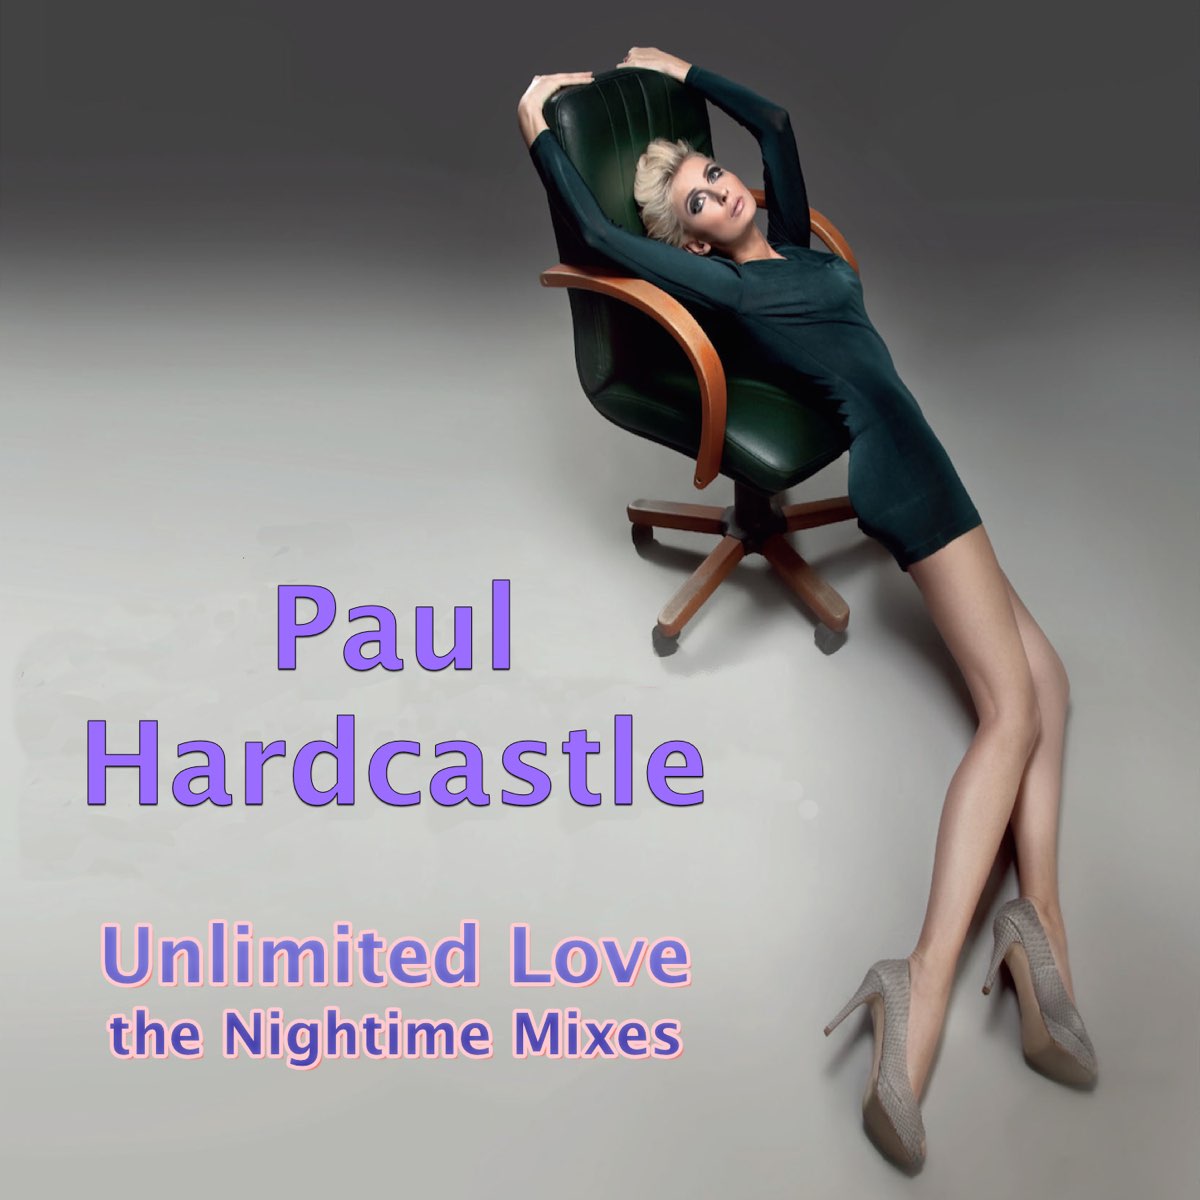 Paul hardcastle. Paul Hardcastle фото альбомов. Unlimited Love. Midnight_Mixes.